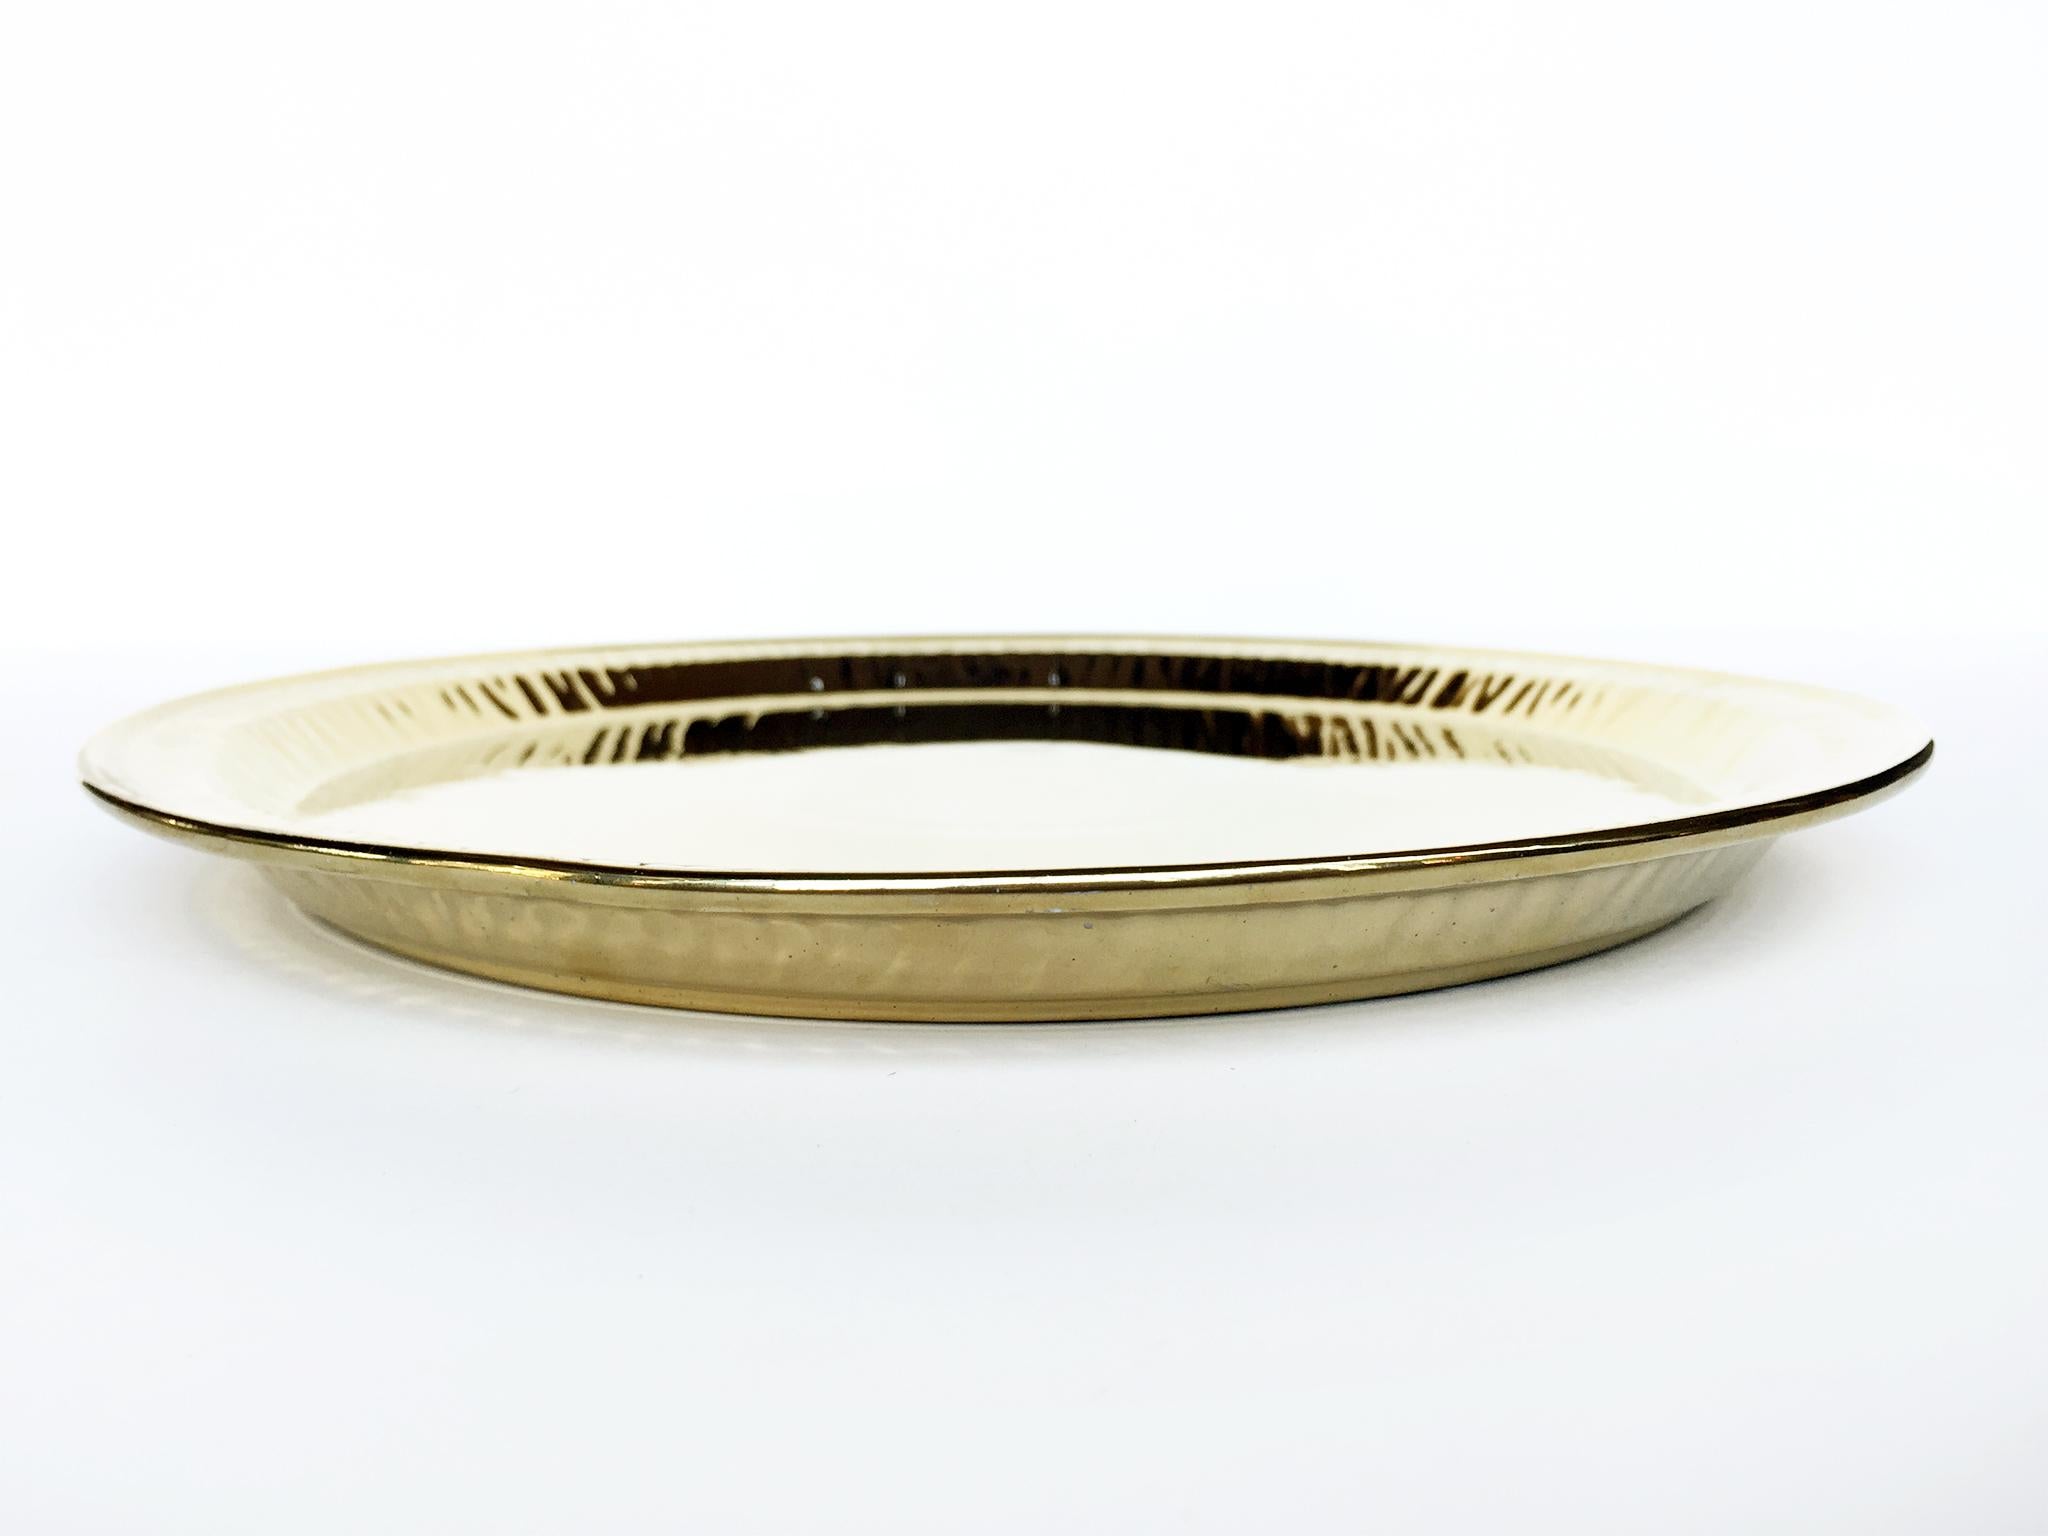 Gilt Seletti Gold Porcelain Plates Estetico Quotidiano Collection, a Set of 8